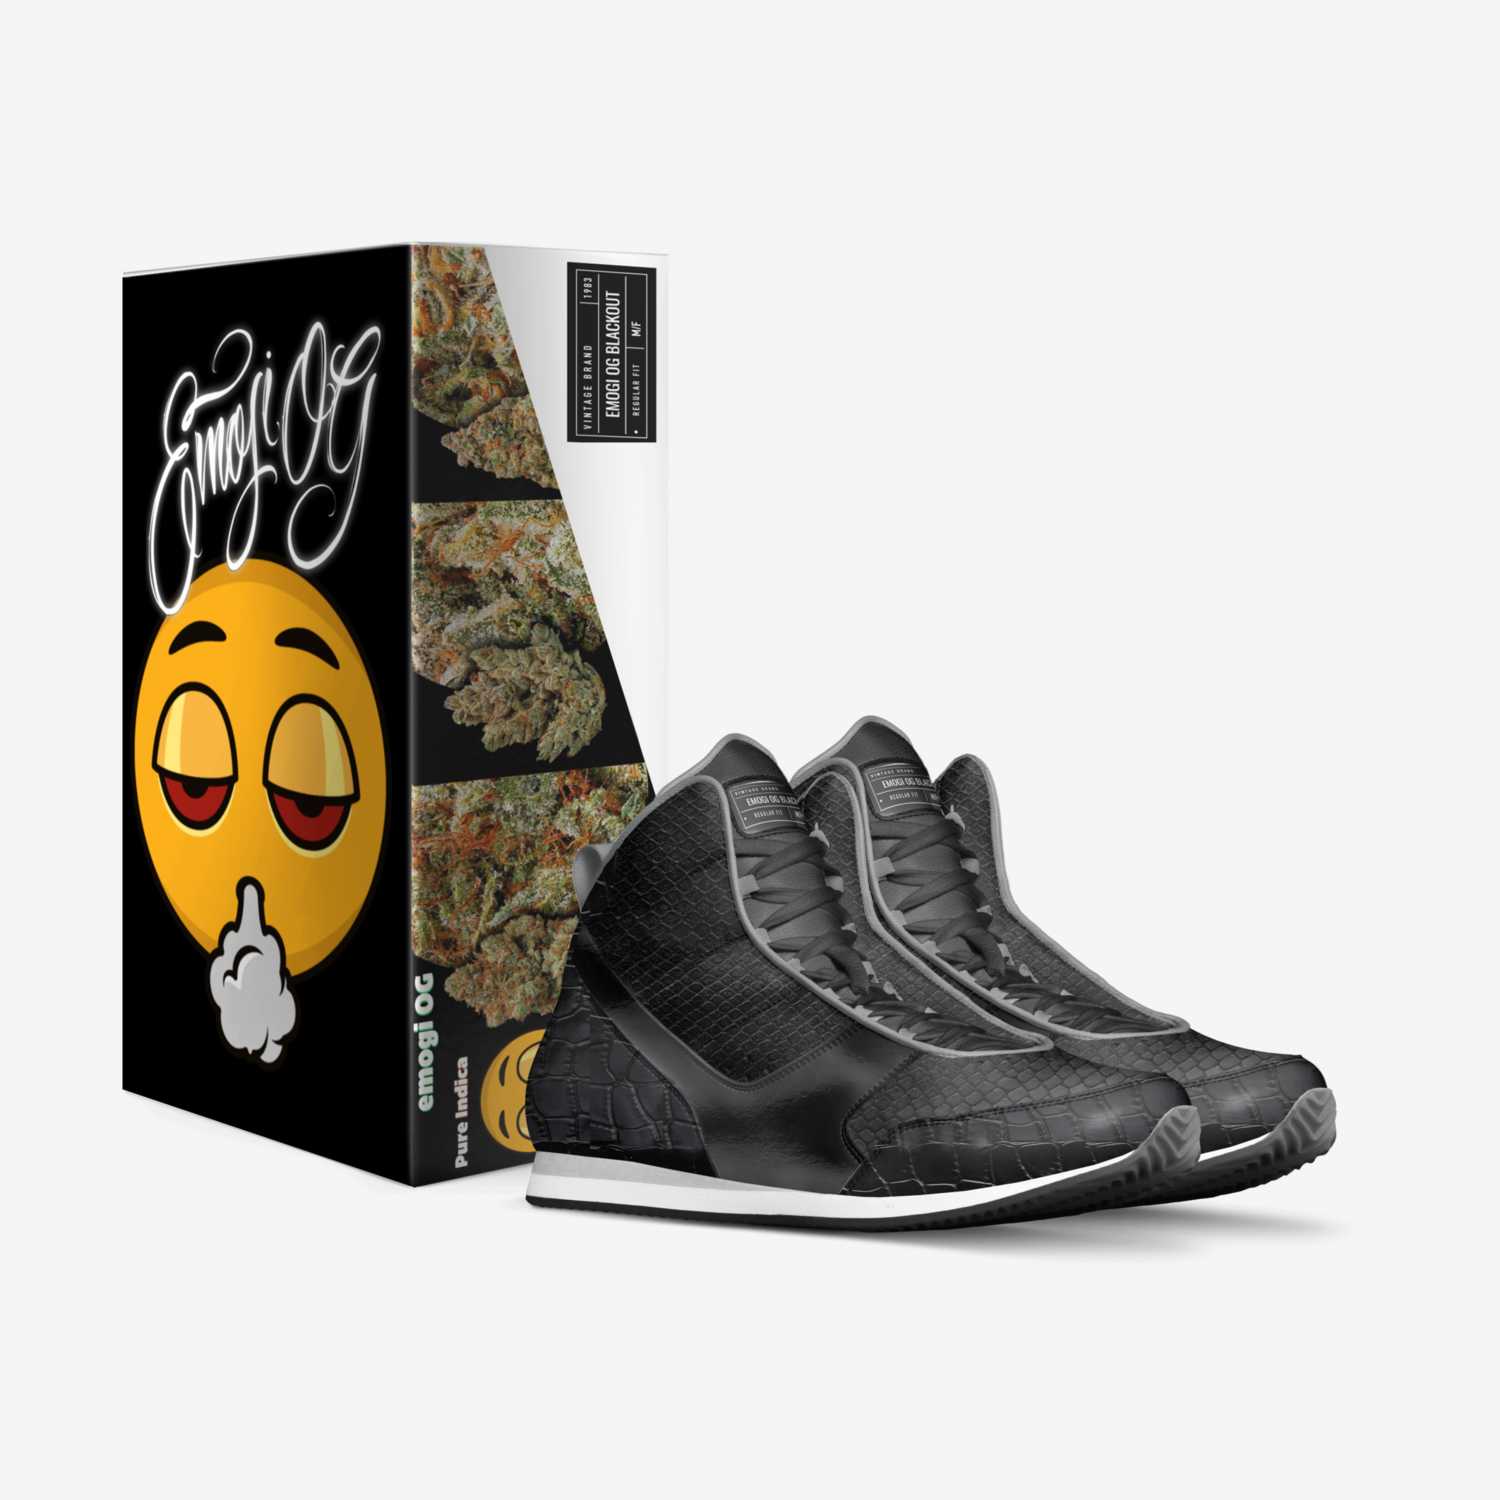 Emogi Og Blackout custom made in Italy shoes by Jennifer Hollywood | Box view